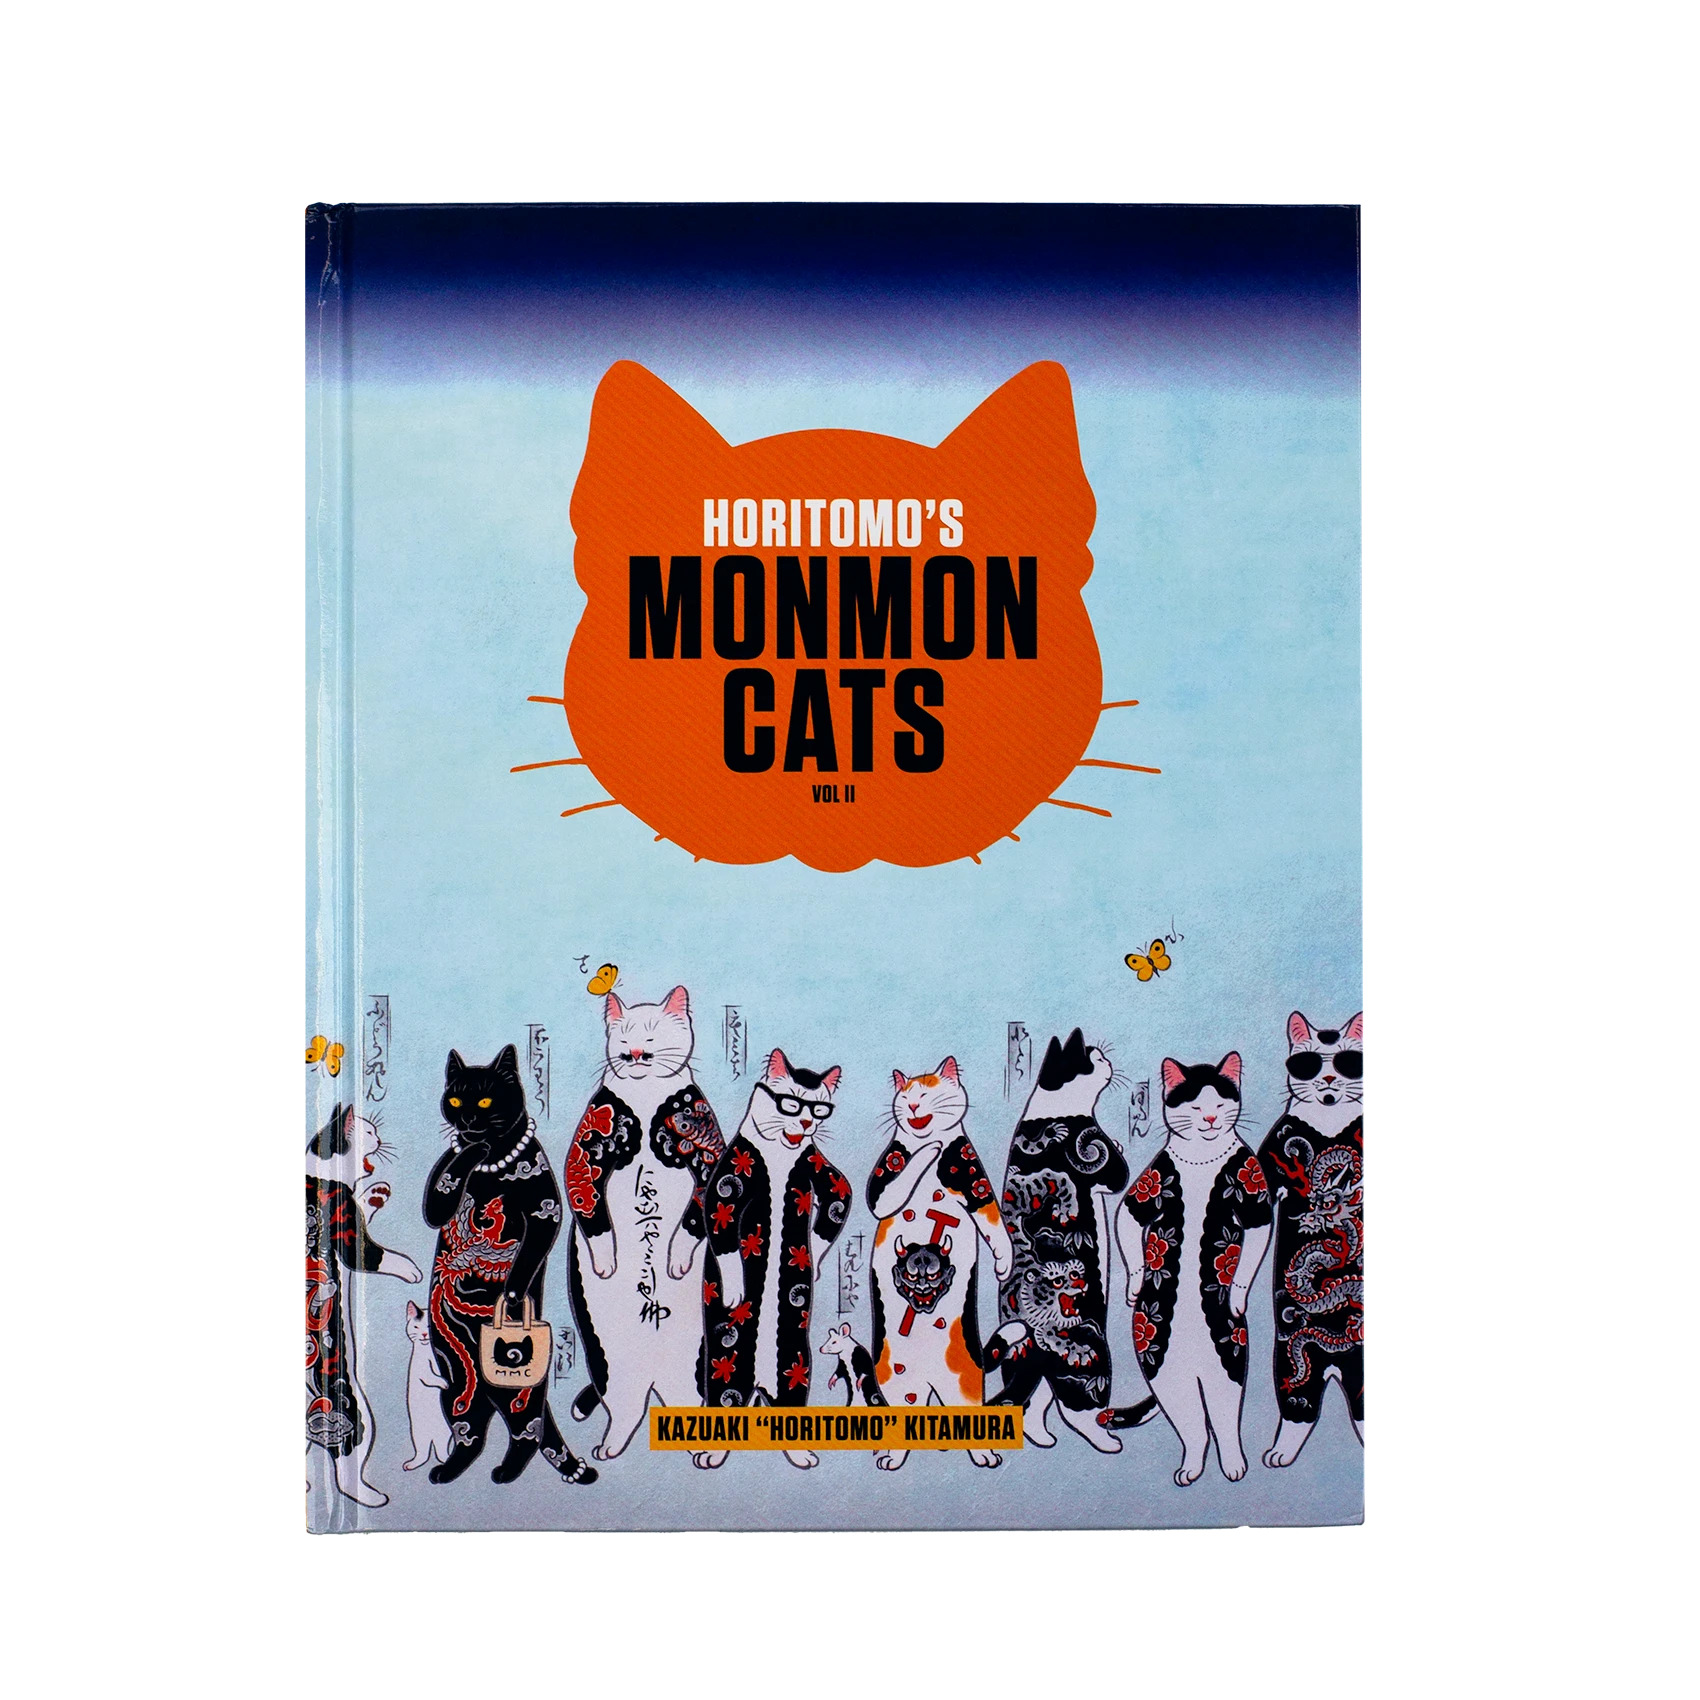 MonmonCatsブック ハードカバー 彫とも アートワークブック Monmon Cats Book Vol 大注目 II MonmonCats モンモンキャッツ Limited Box Signed 評判 - Set Edition Hardcover